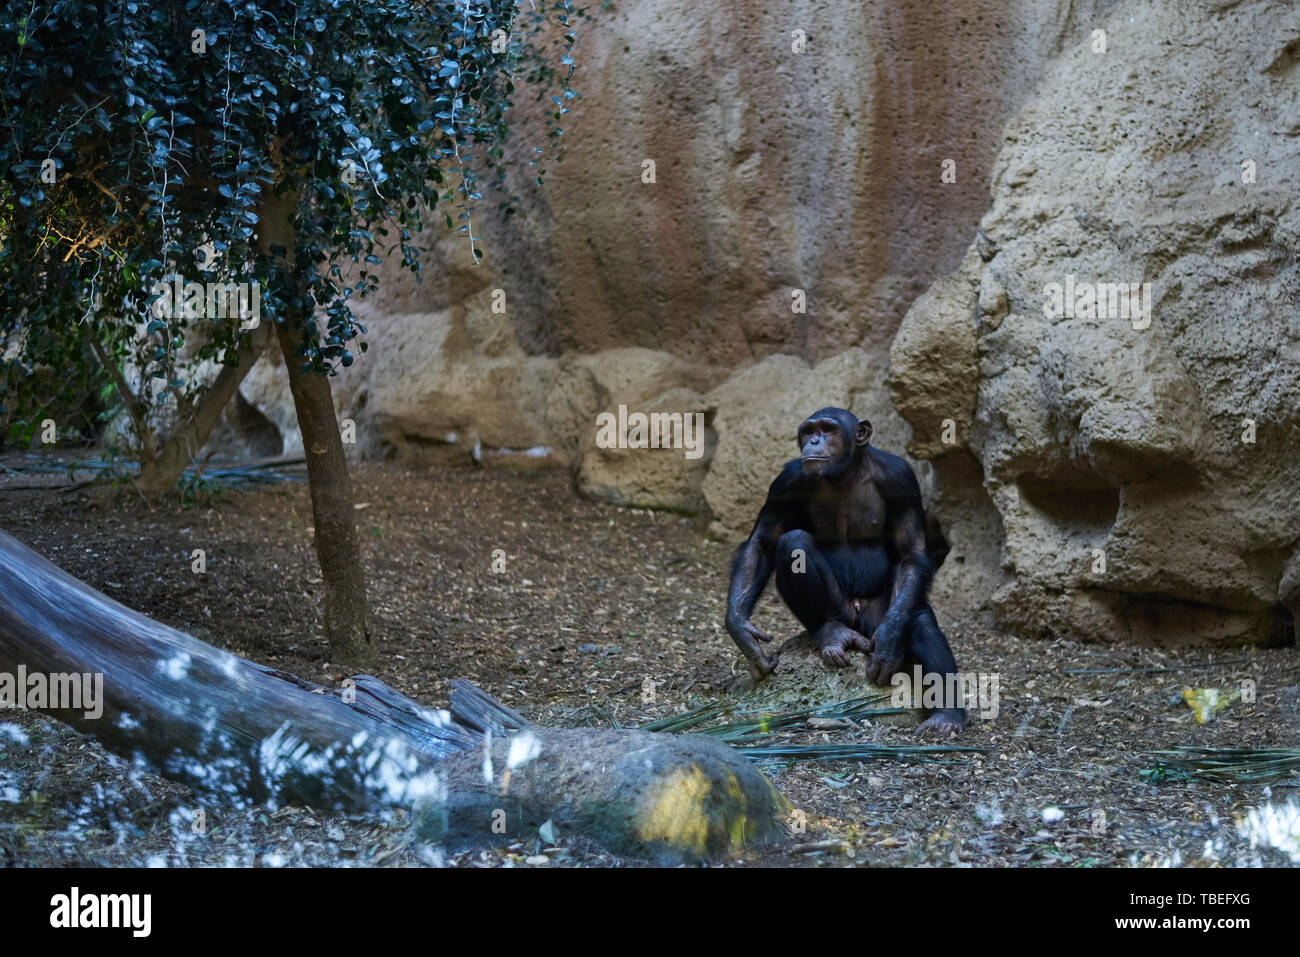 Uno scimpanzé in un ambiente artificiale Foto Stock